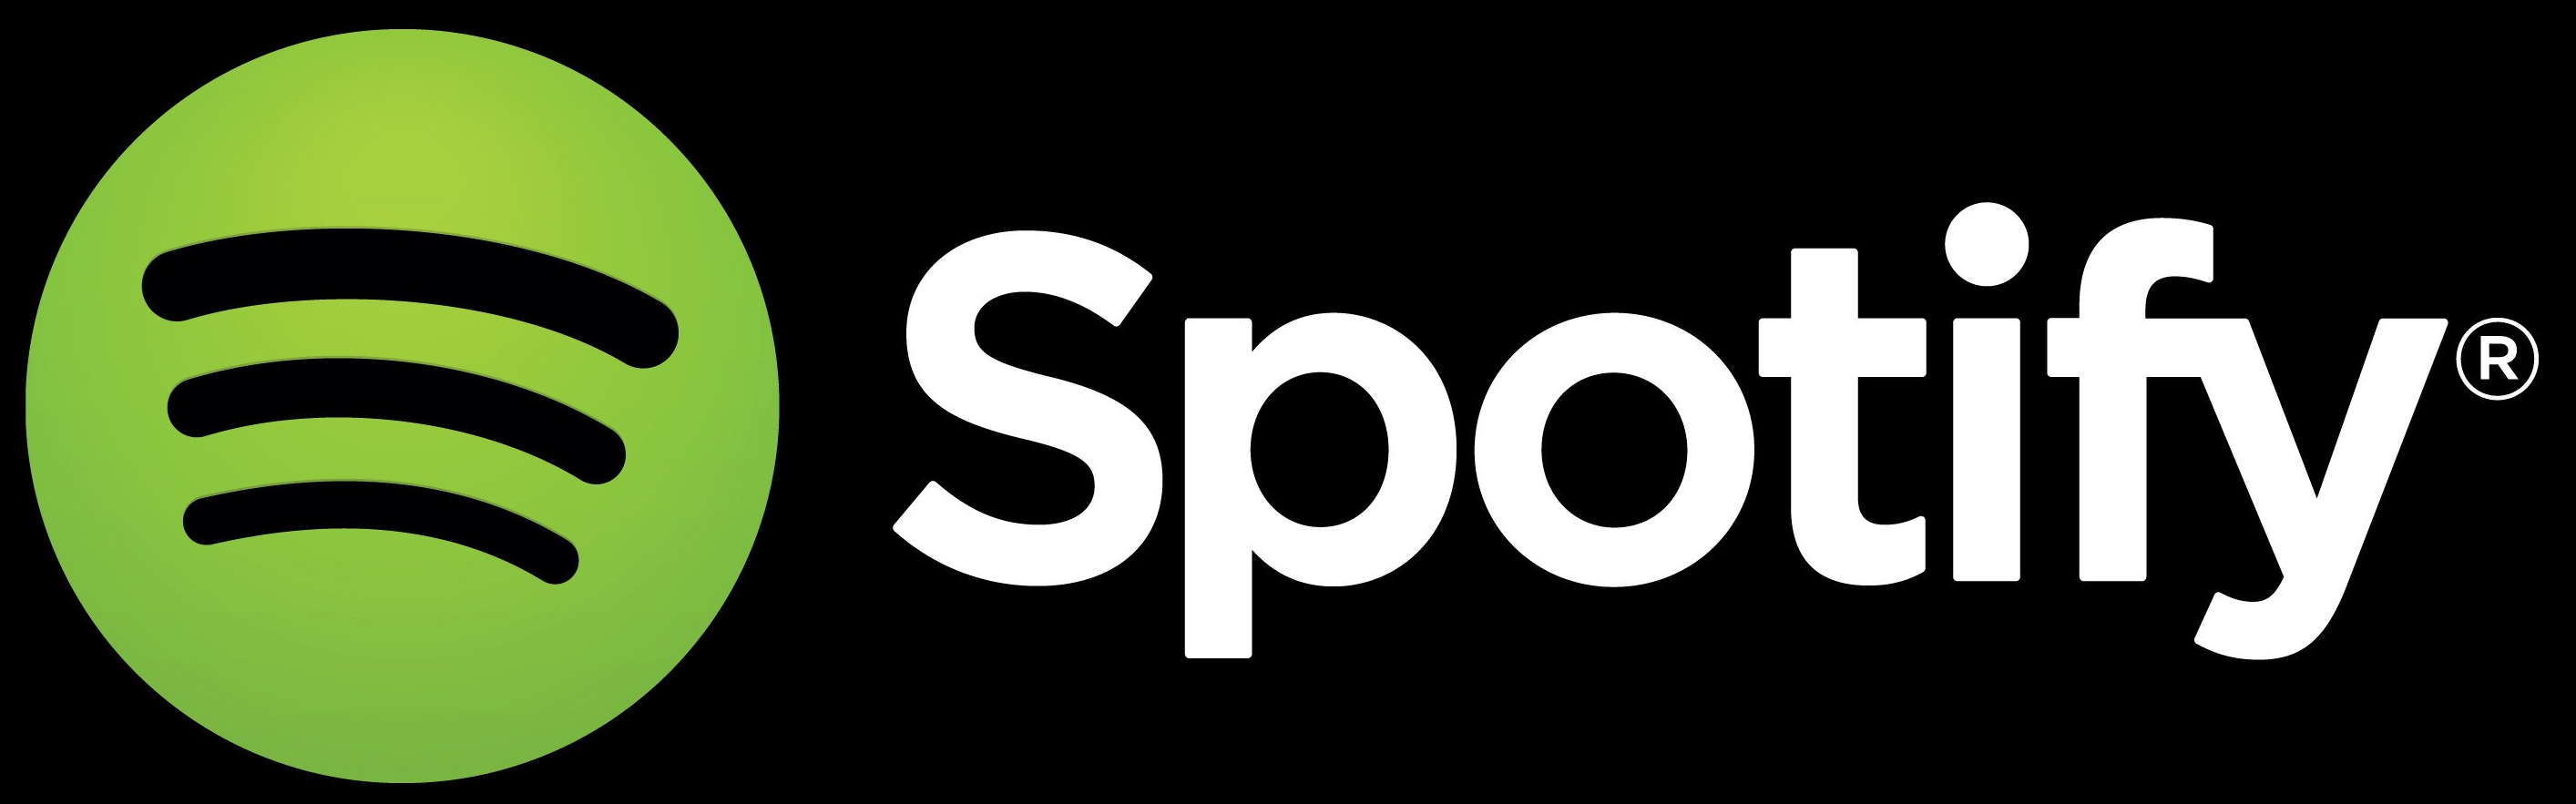 spotify-logo-horizontal-black.jpg